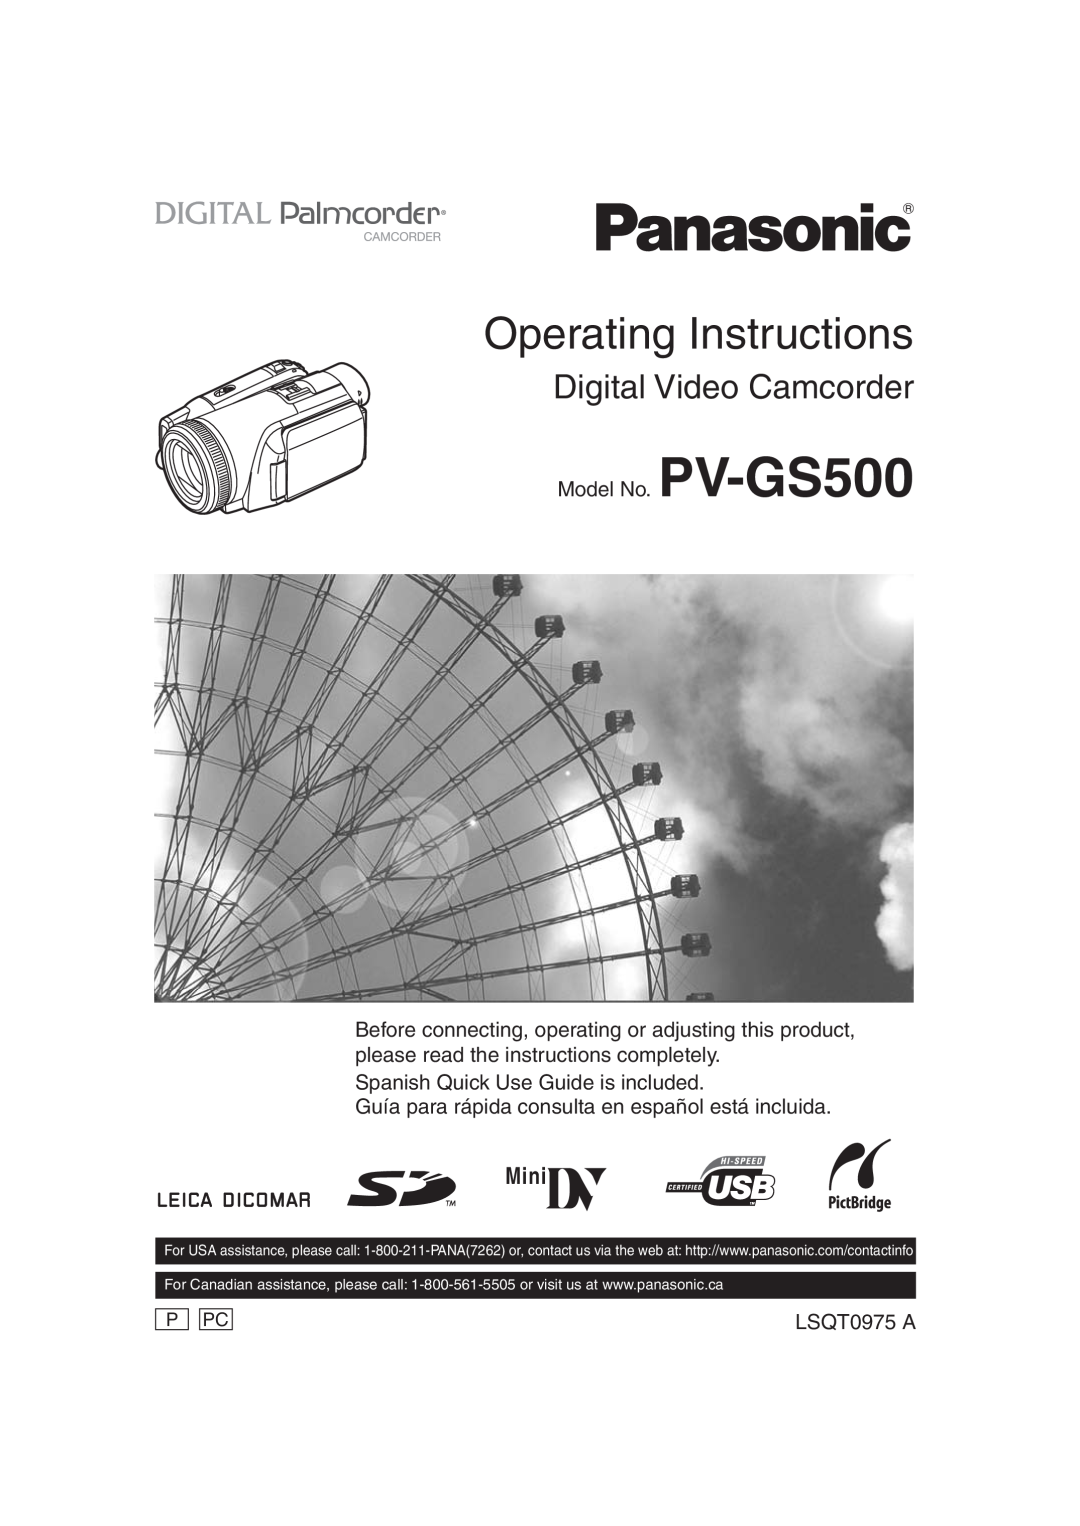 Panasonic PV-GS500 operating instructions Mini, Operating Instructions, Digital Video Camcorder, P Pc 